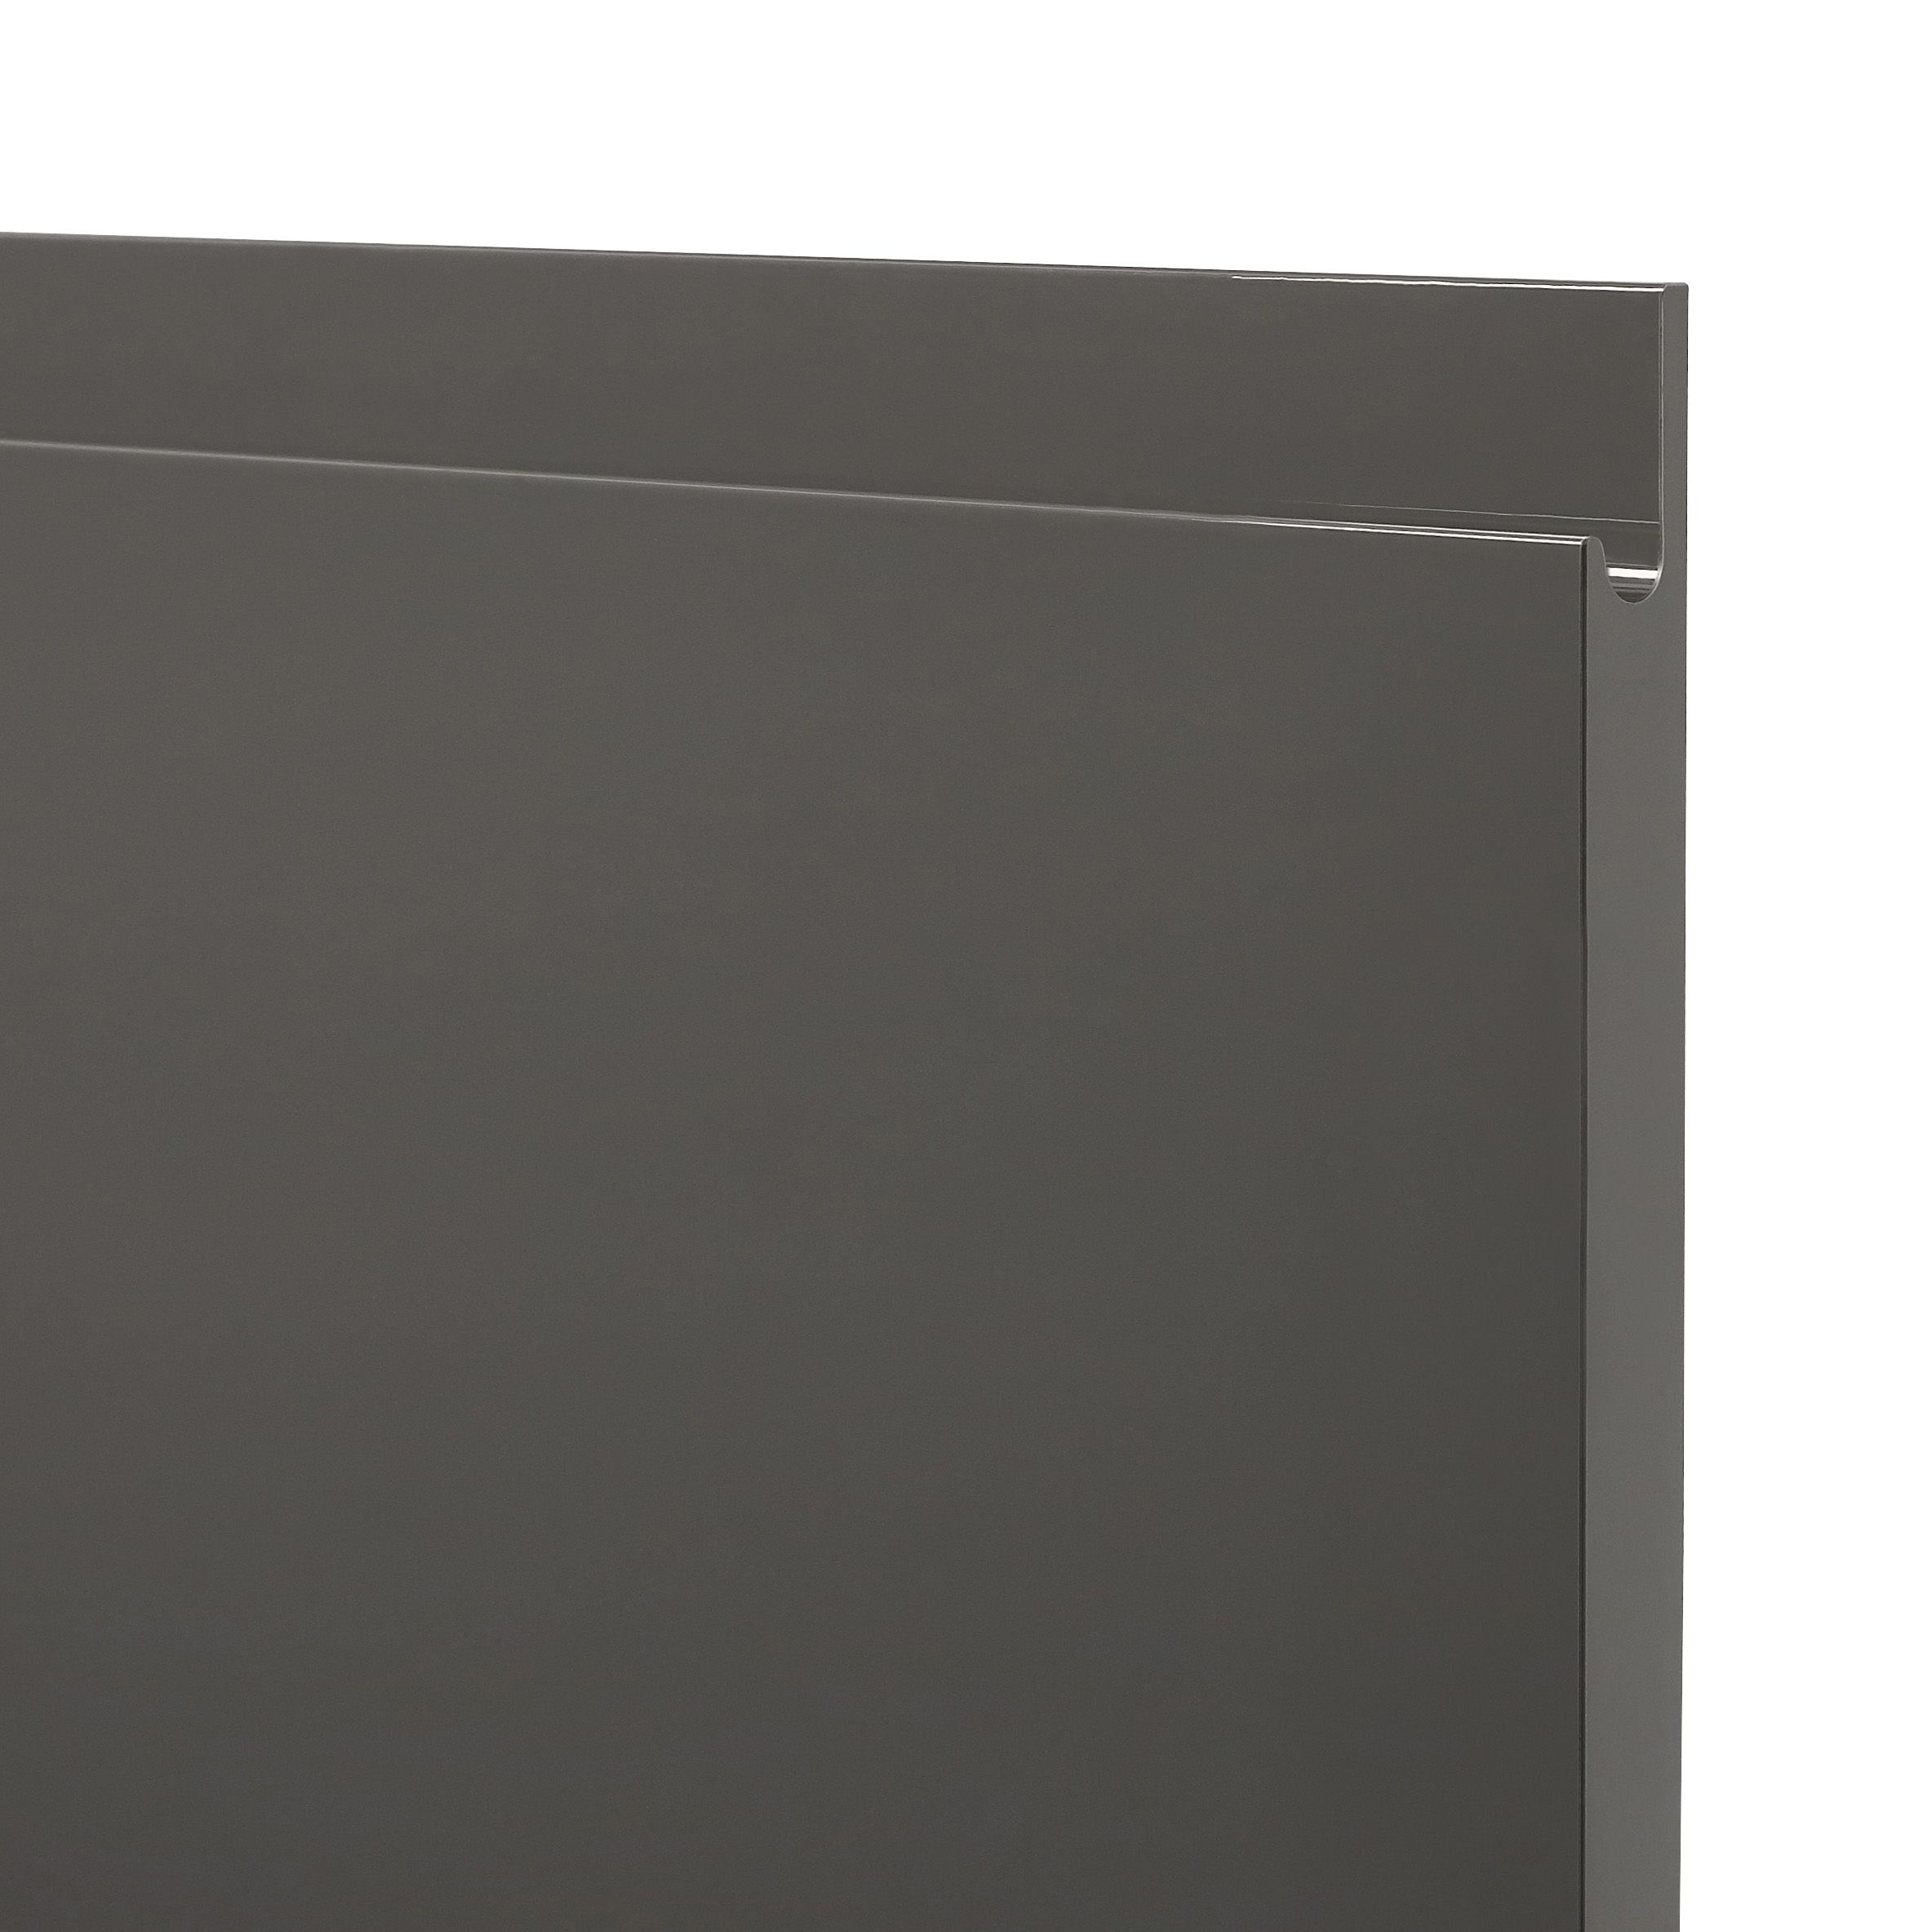 GoodHome Garcinia Gloss anthracite integrated handle Drawer front, bridging door & bi fold door, (W)500mm (H)356mm (T)19mm